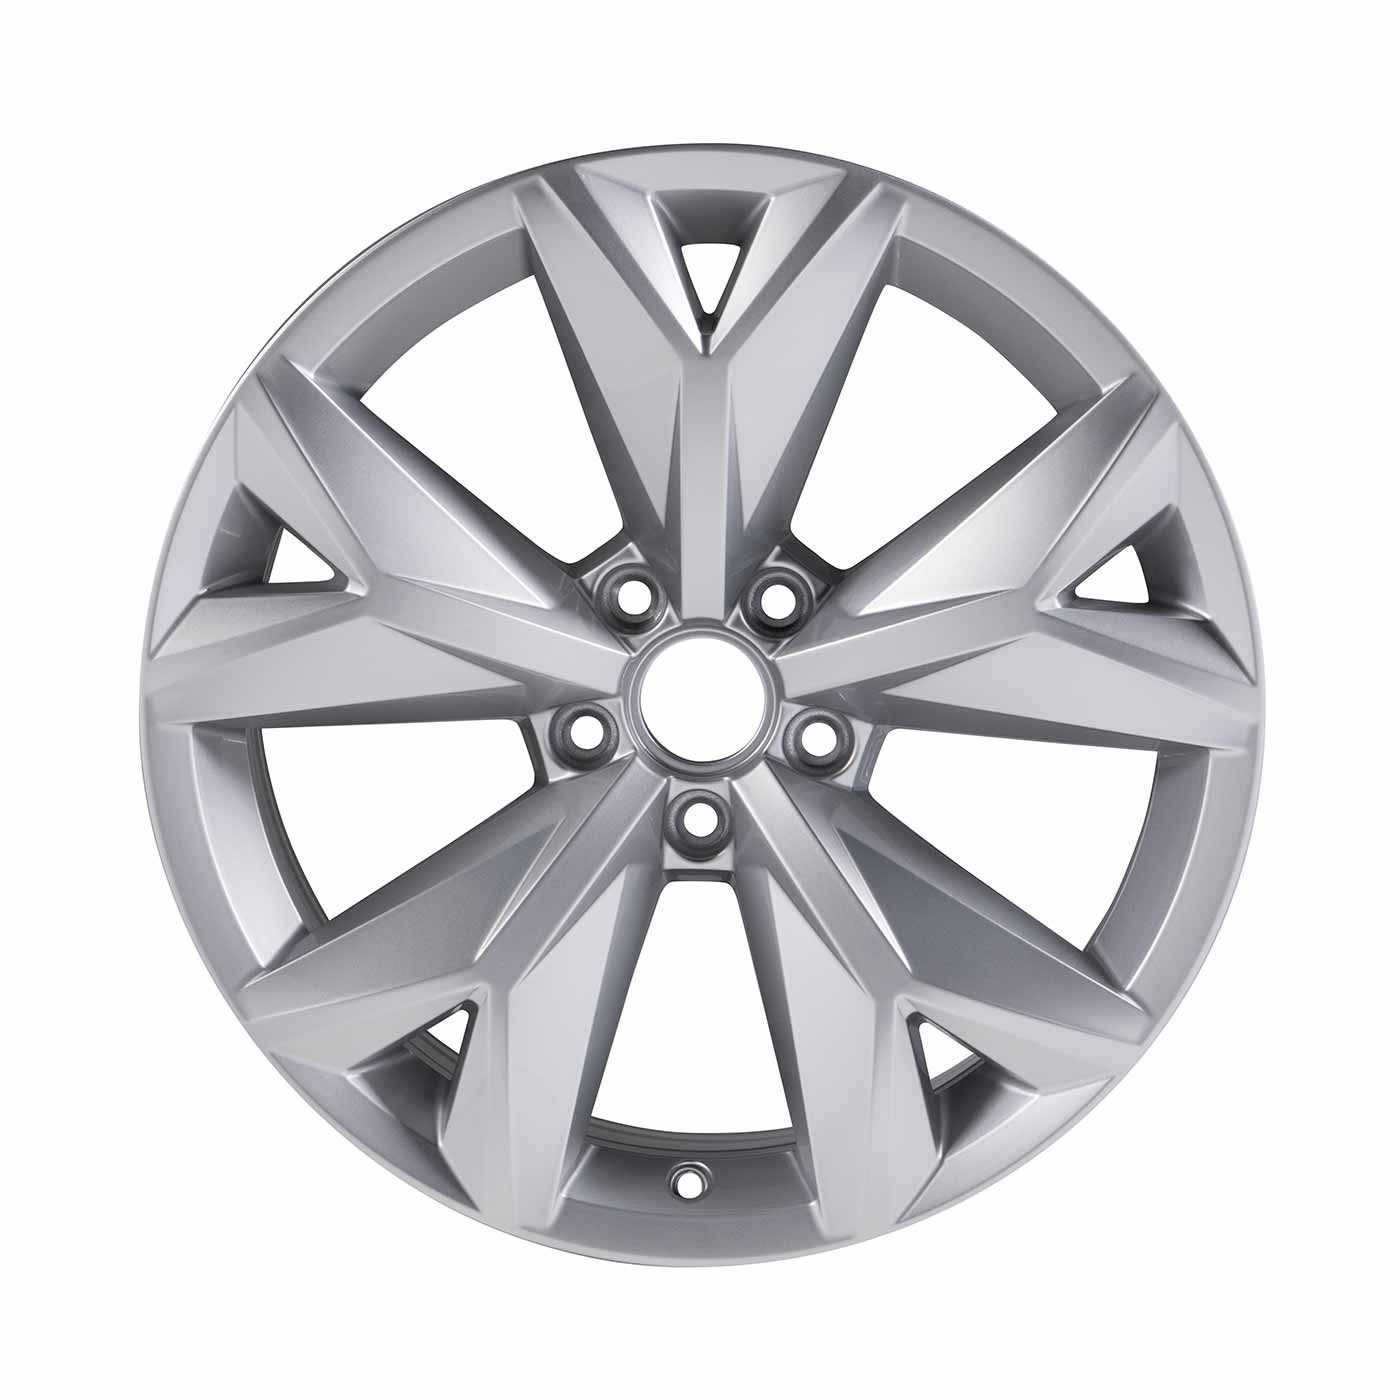 Volkswagen 18" Prisma Wheel | VW Service and Parts